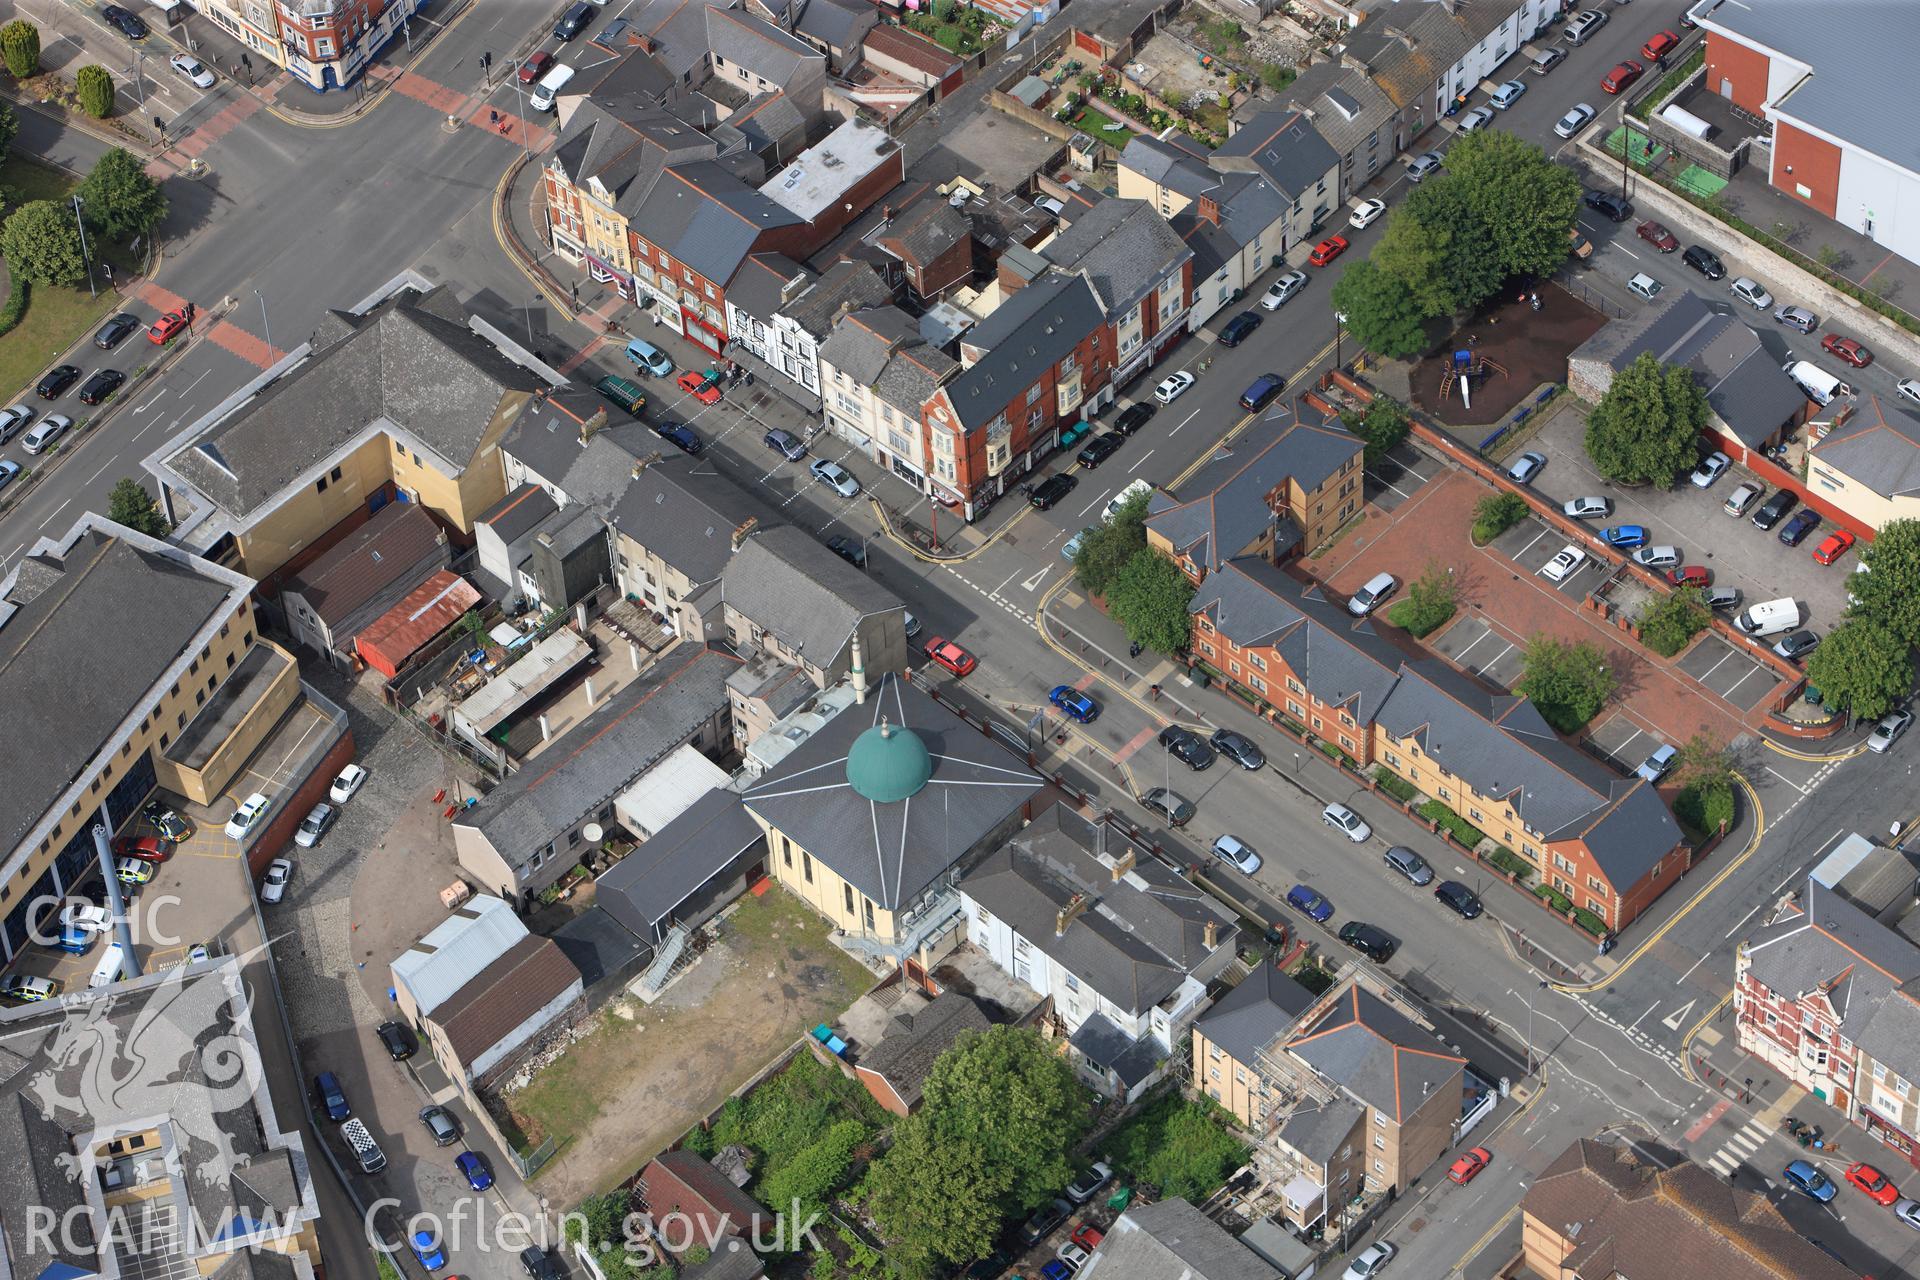 RCAHMW colour oblique photograph of Newport city centre. Taken by Toby Driver on 13/06/2011.